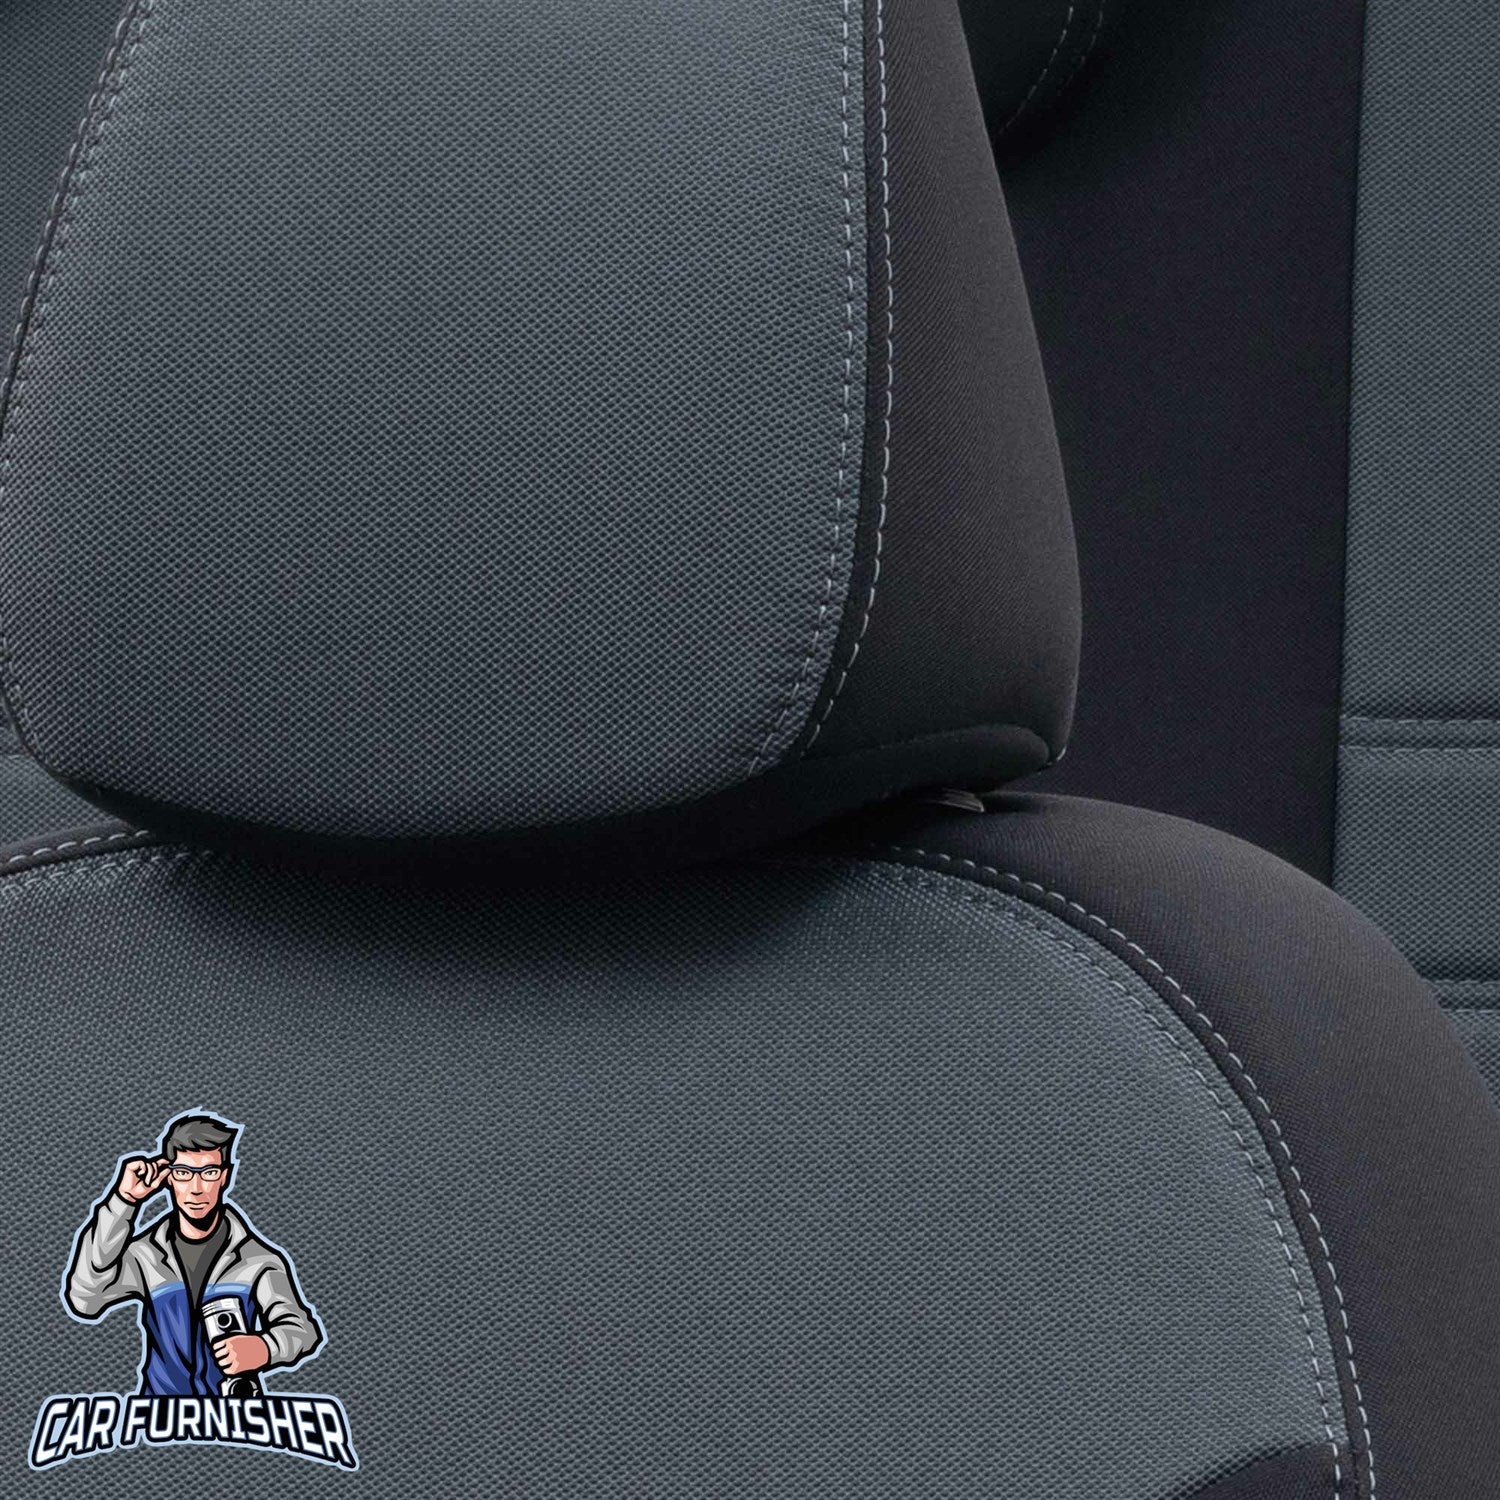 Ford Galaxy Seat Covers Original Jacquard Design Smoked Black Jacquard Fabric